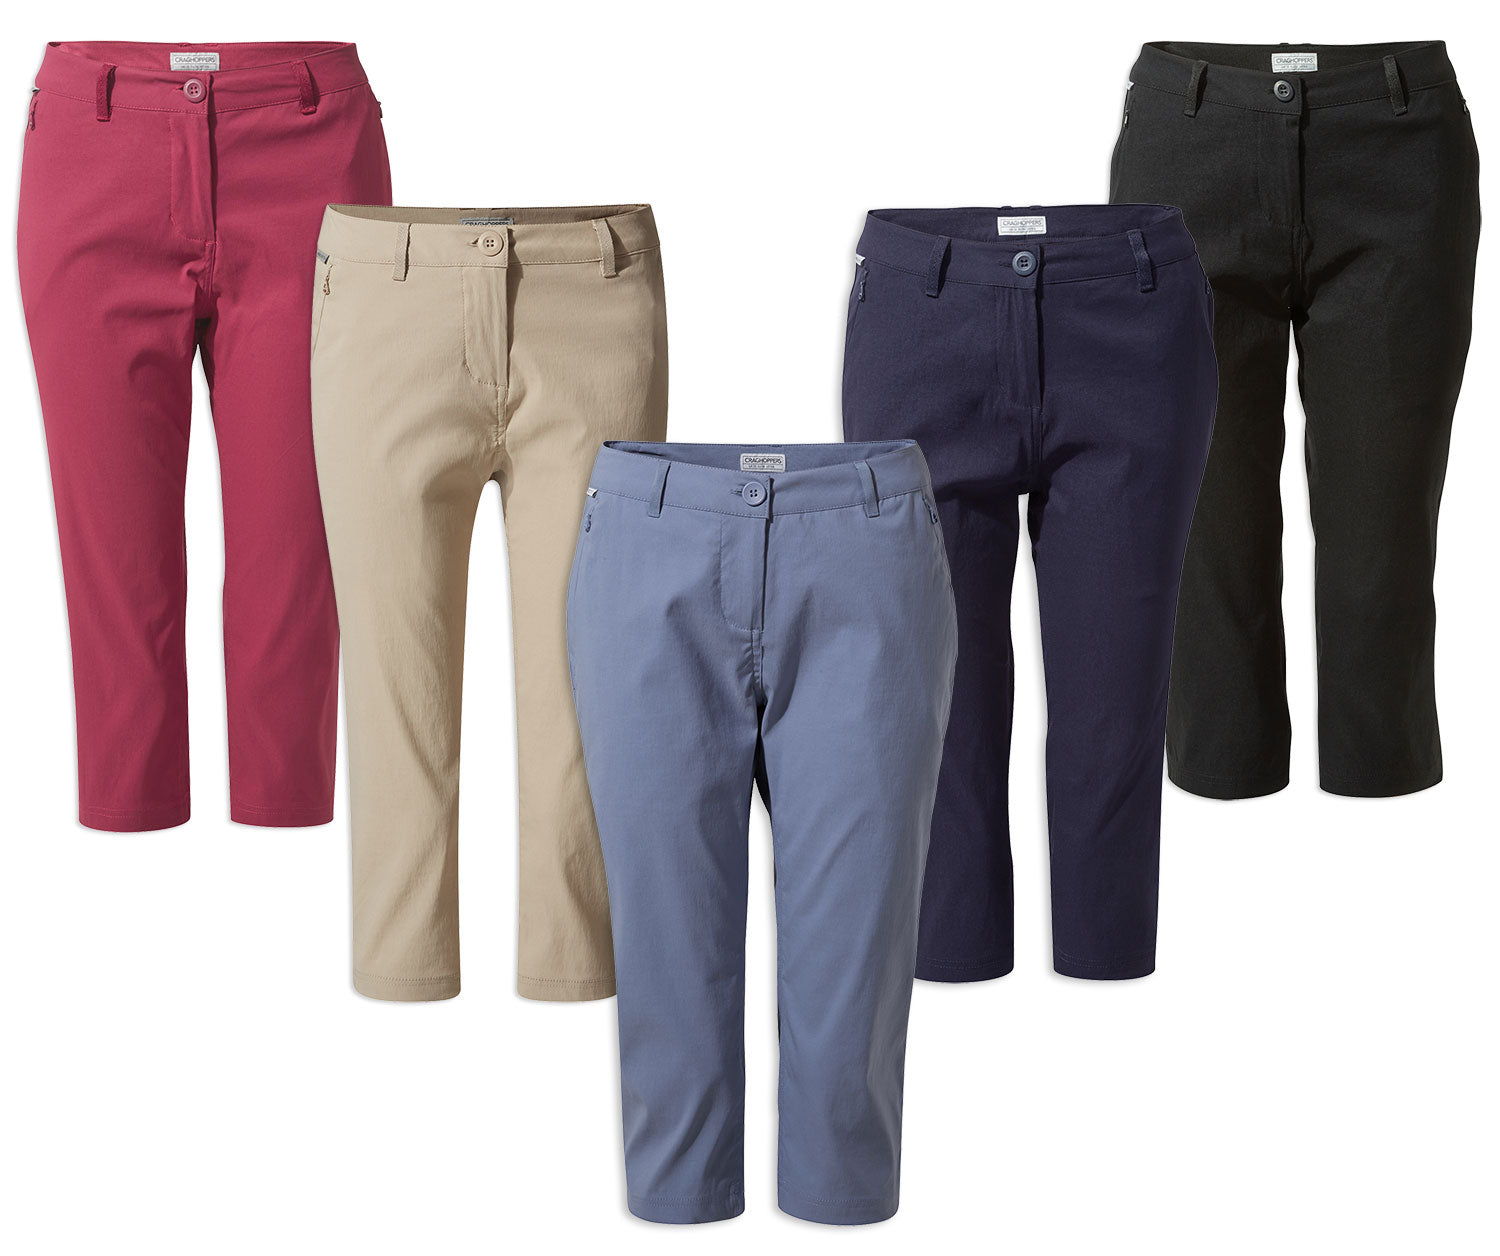 Shop Ladies Cropped Trousers Online Australia - Scanlan Theodore